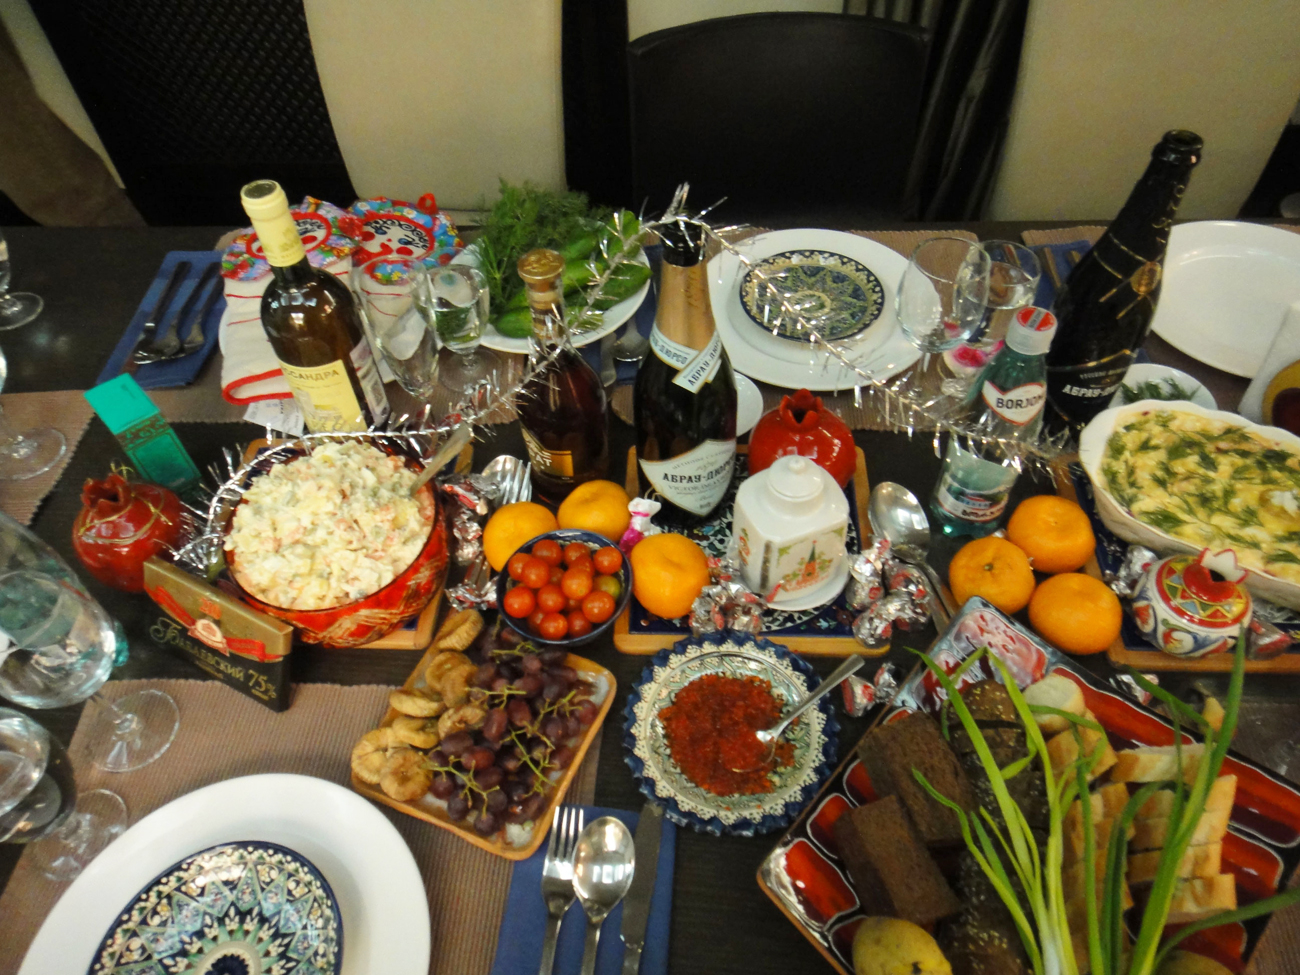 New Year table, Soviet diet style. Source: Anna Kharzeeva